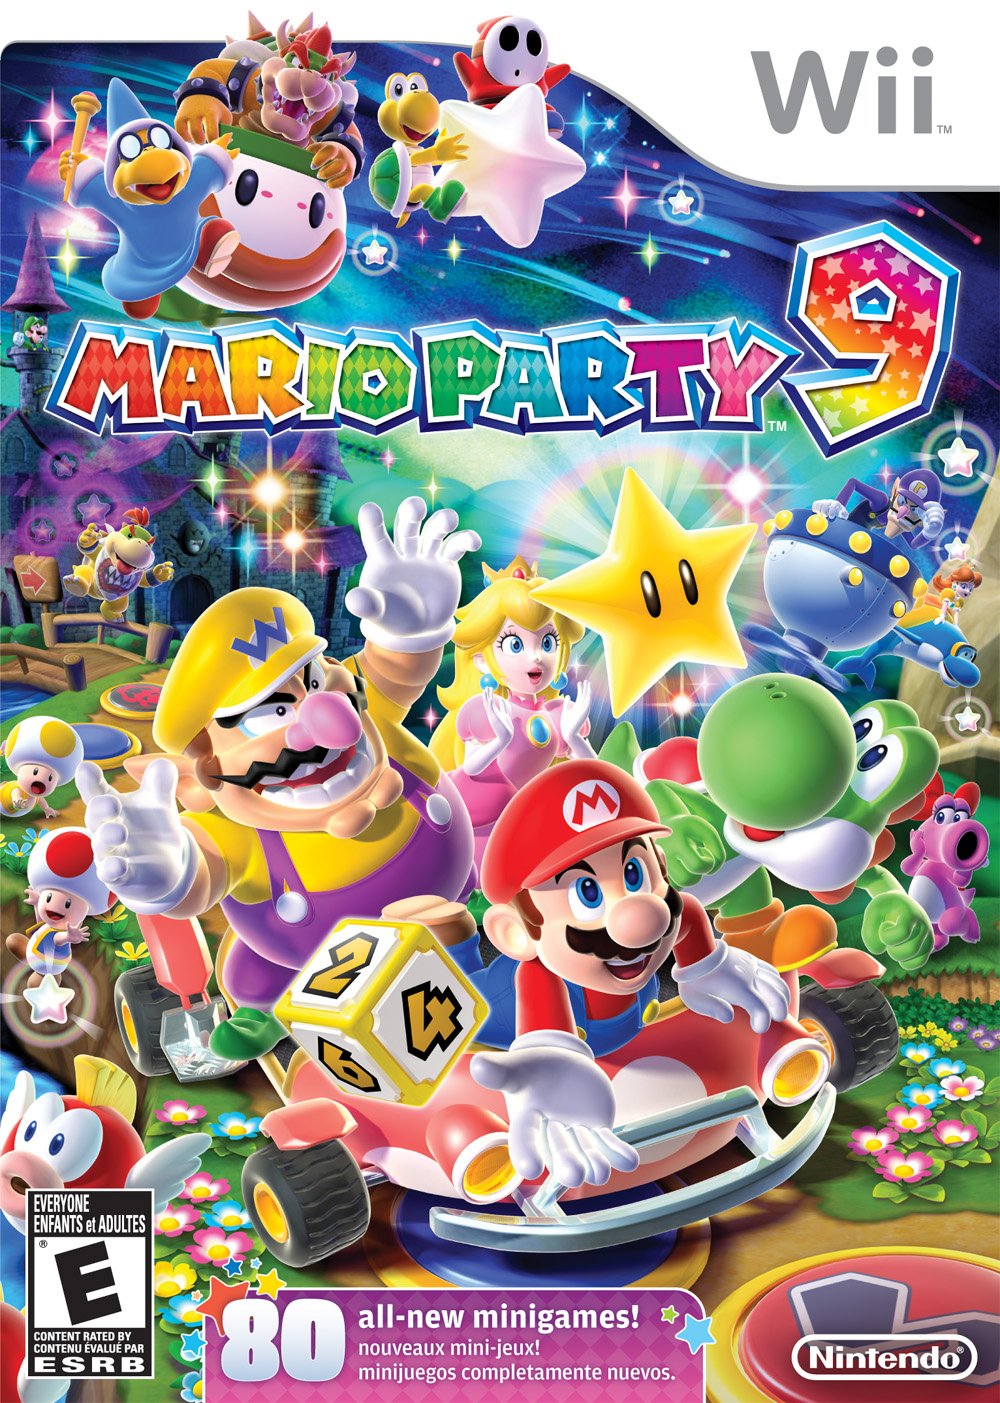 Hol Confronteren tentoonstelling Mario Party 9 - Super Mario Wiki, the Mario encyclopedia